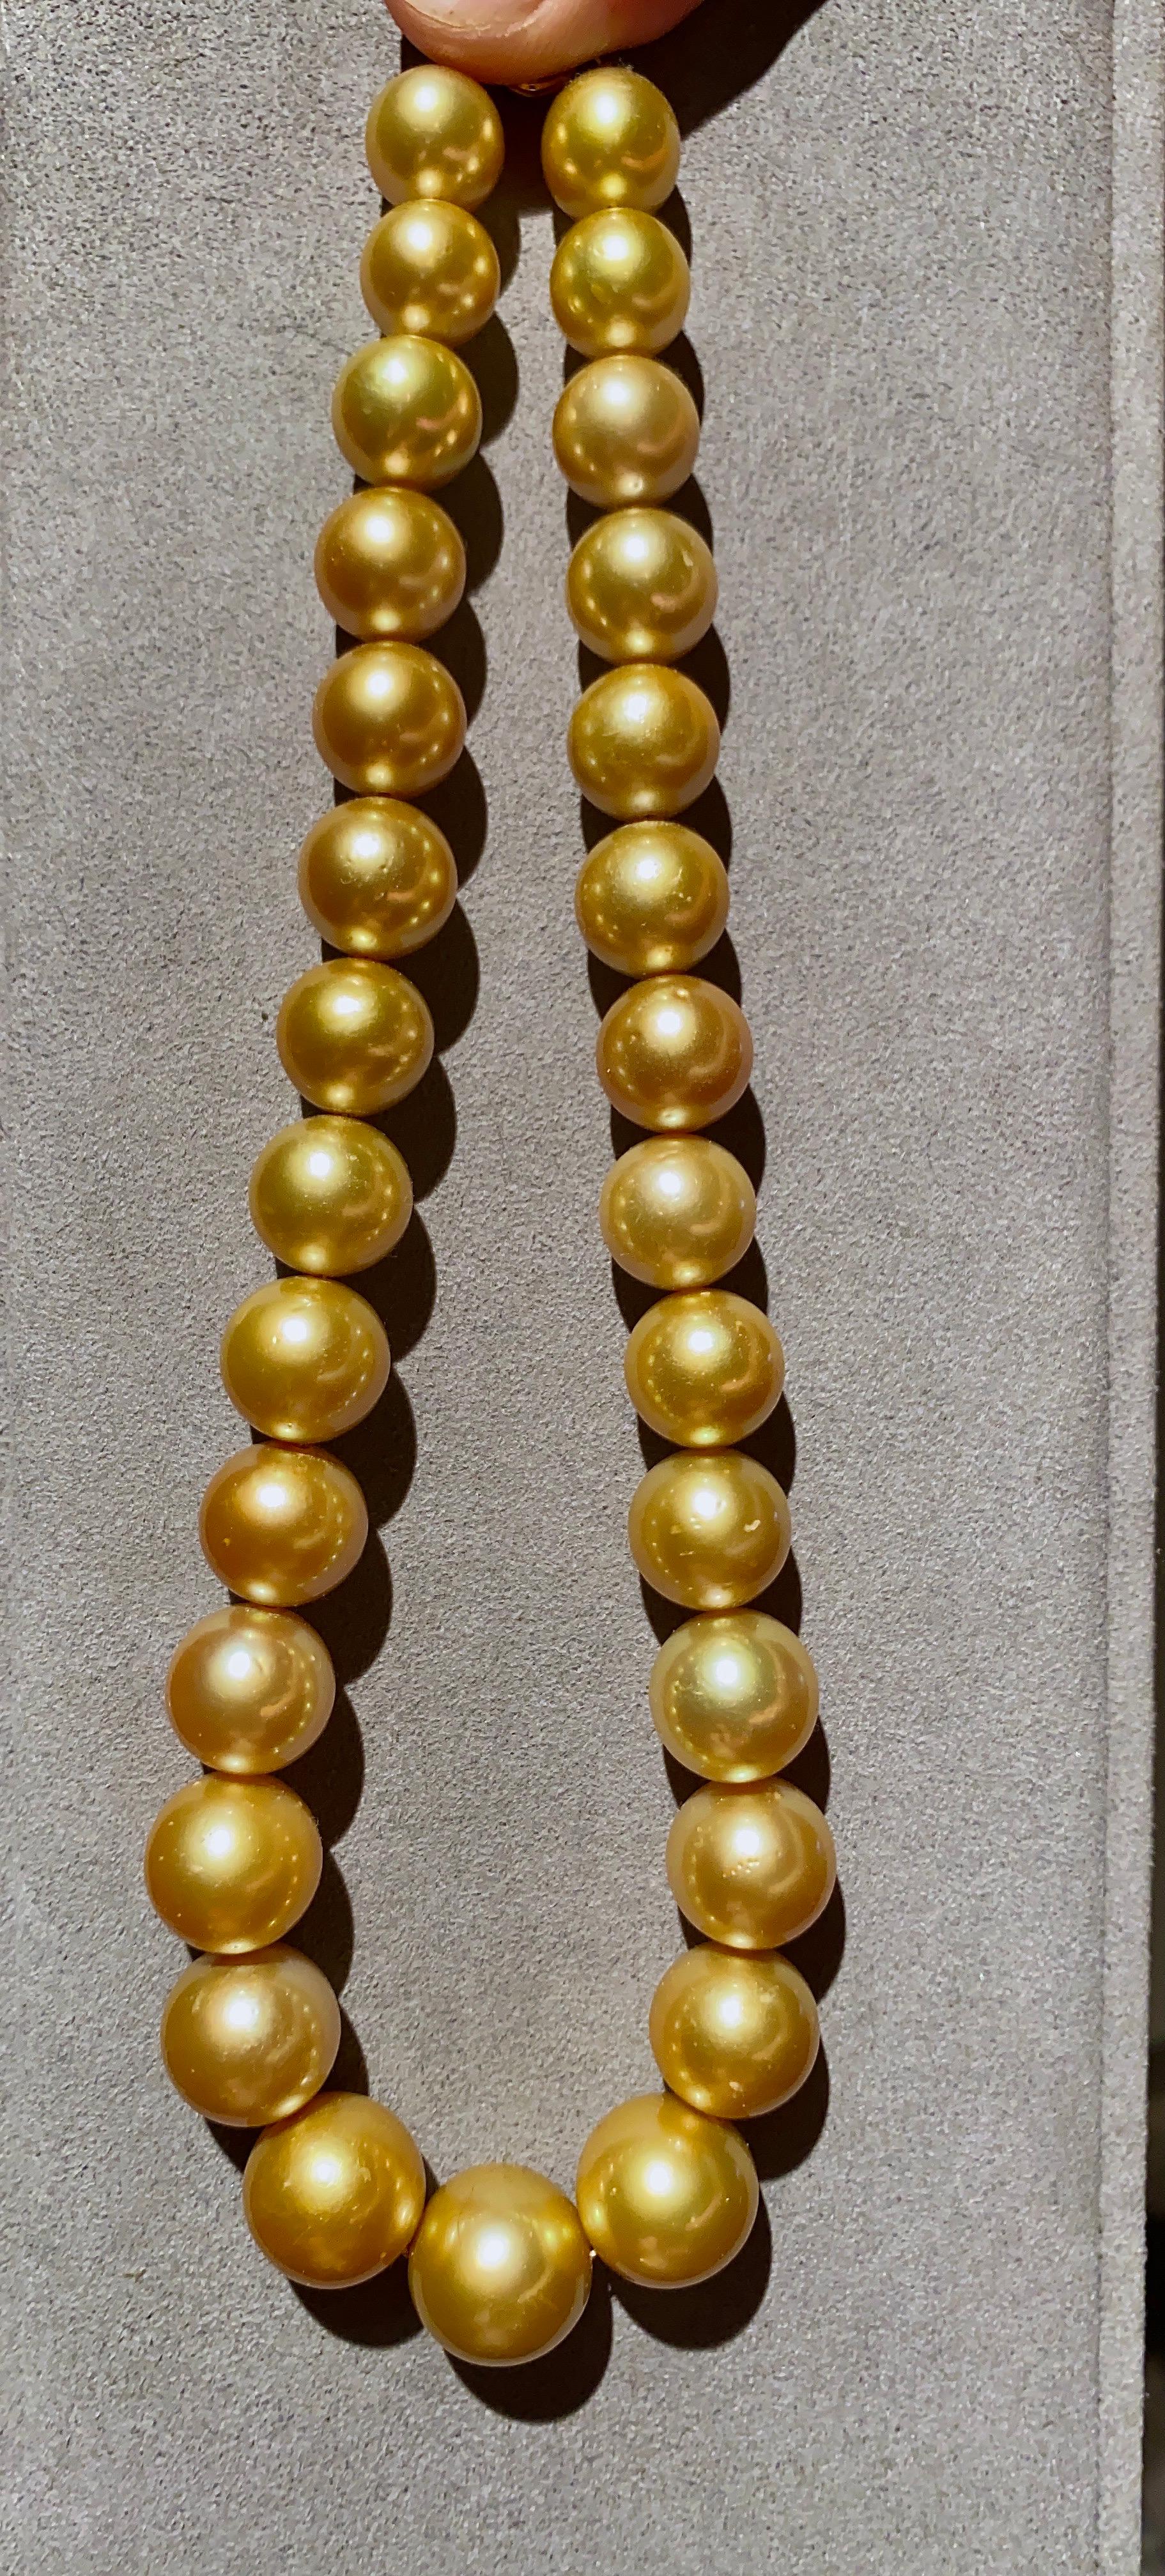 yellowed pearls